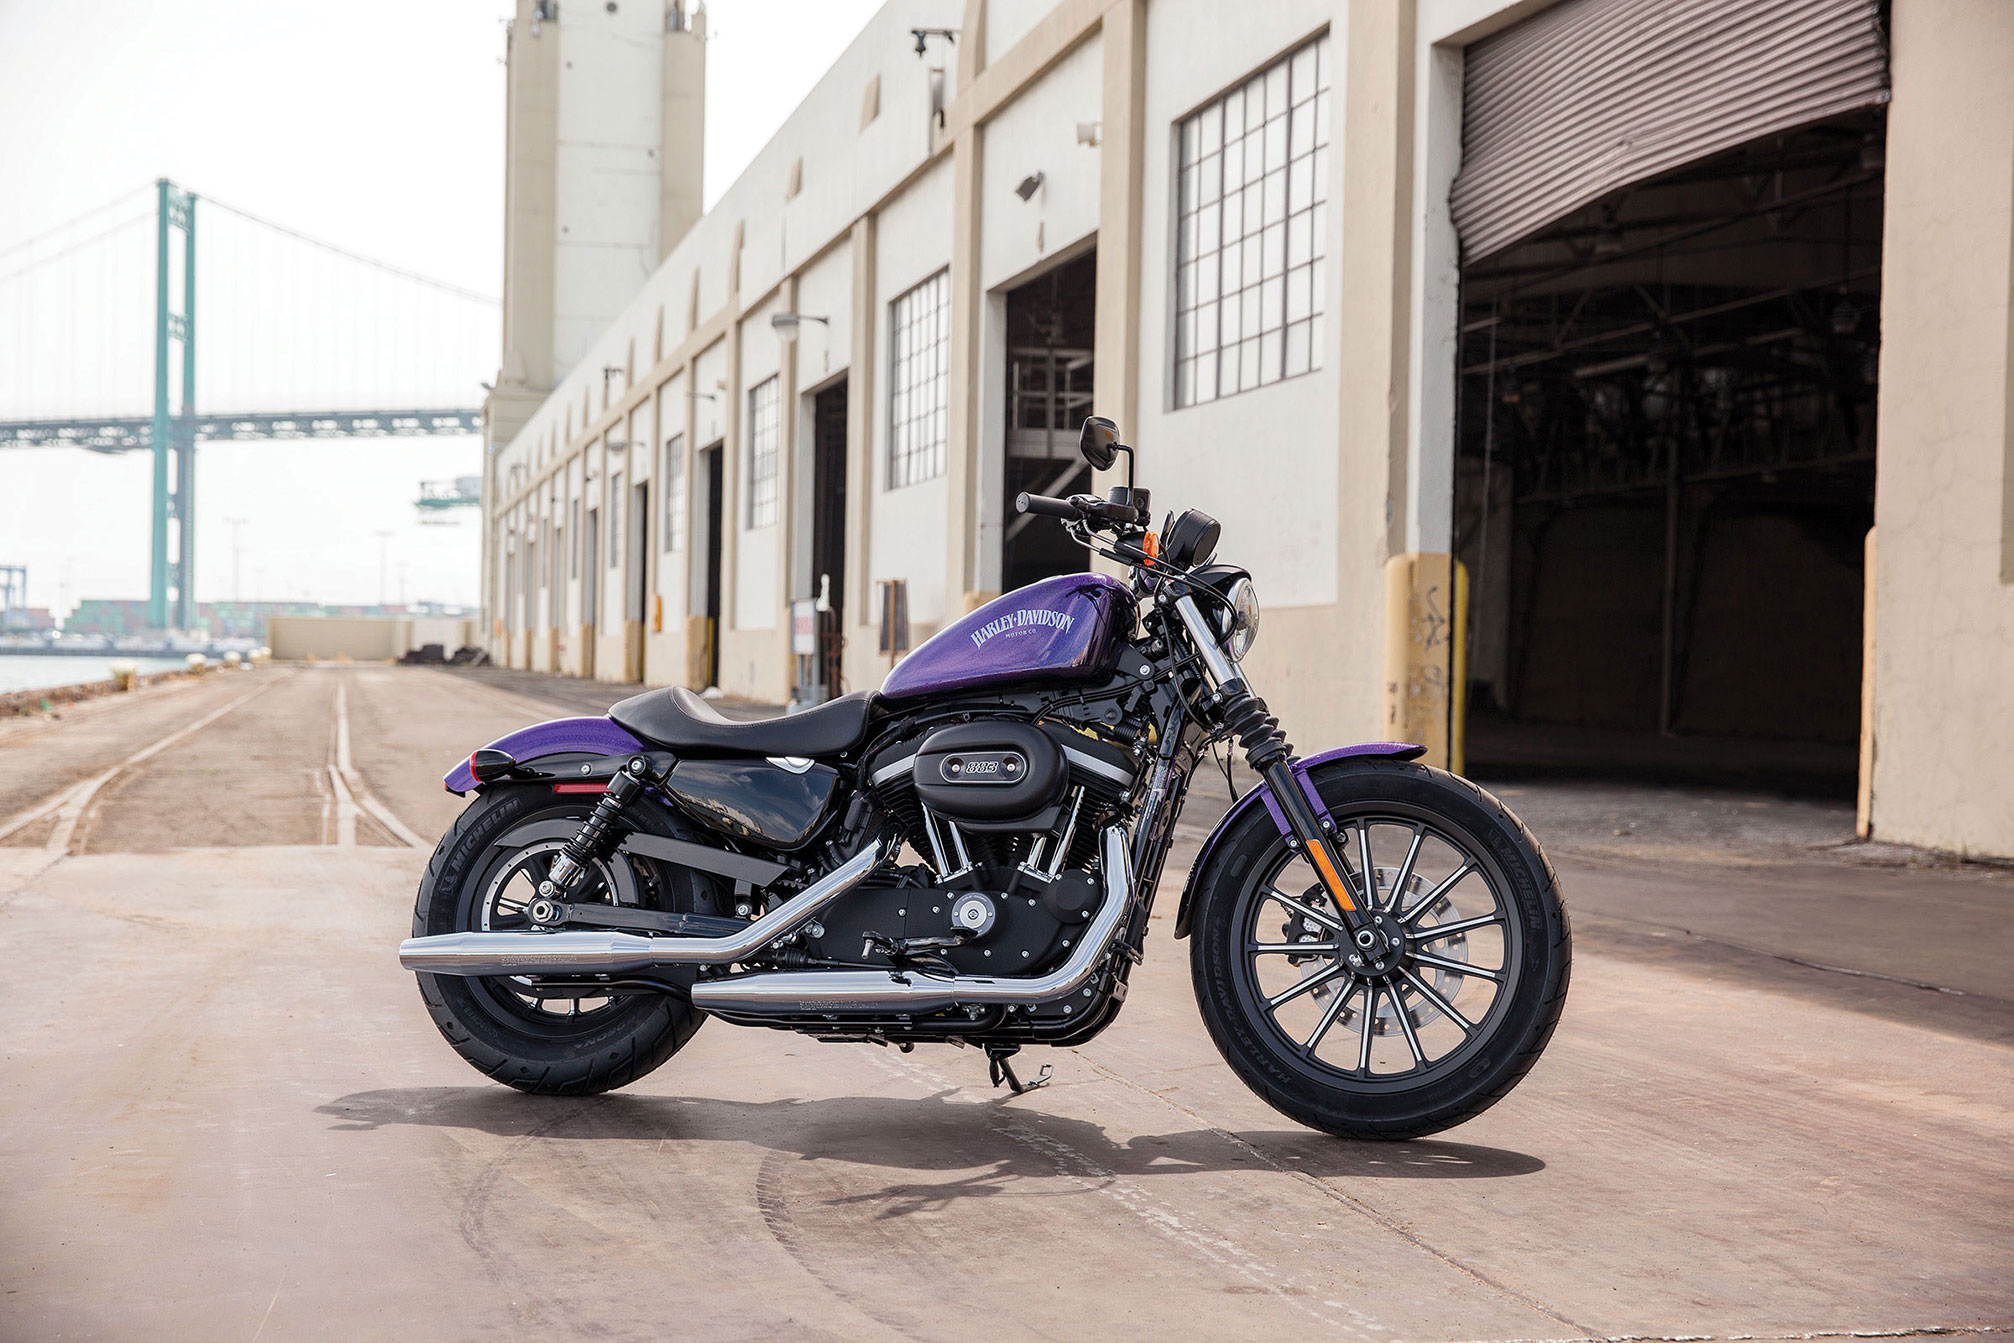 2014 Harley Davidson Xl883n Iron 883 Review